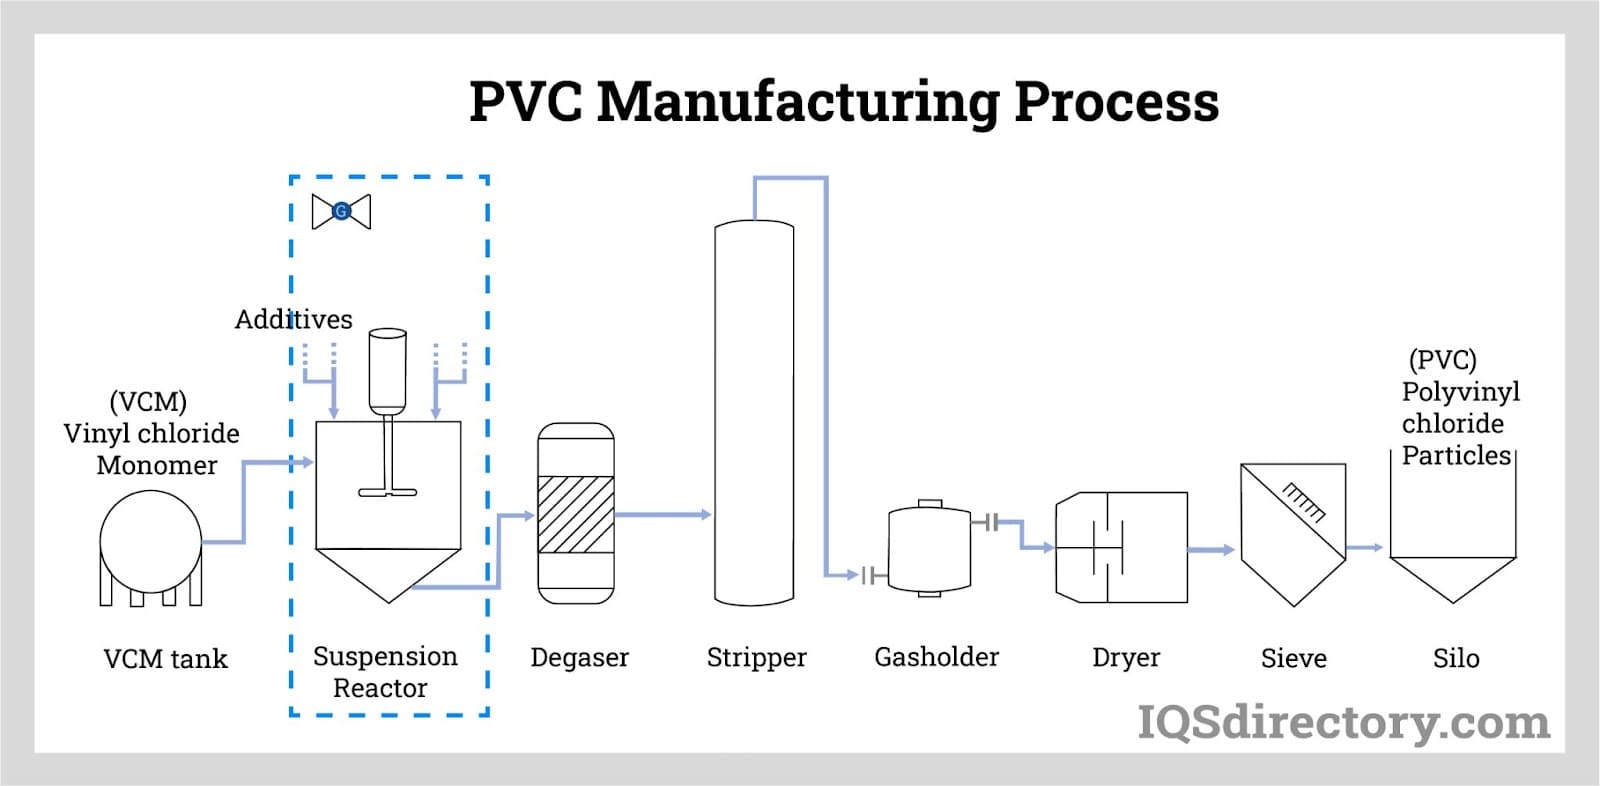 PVC Manufacturing Process